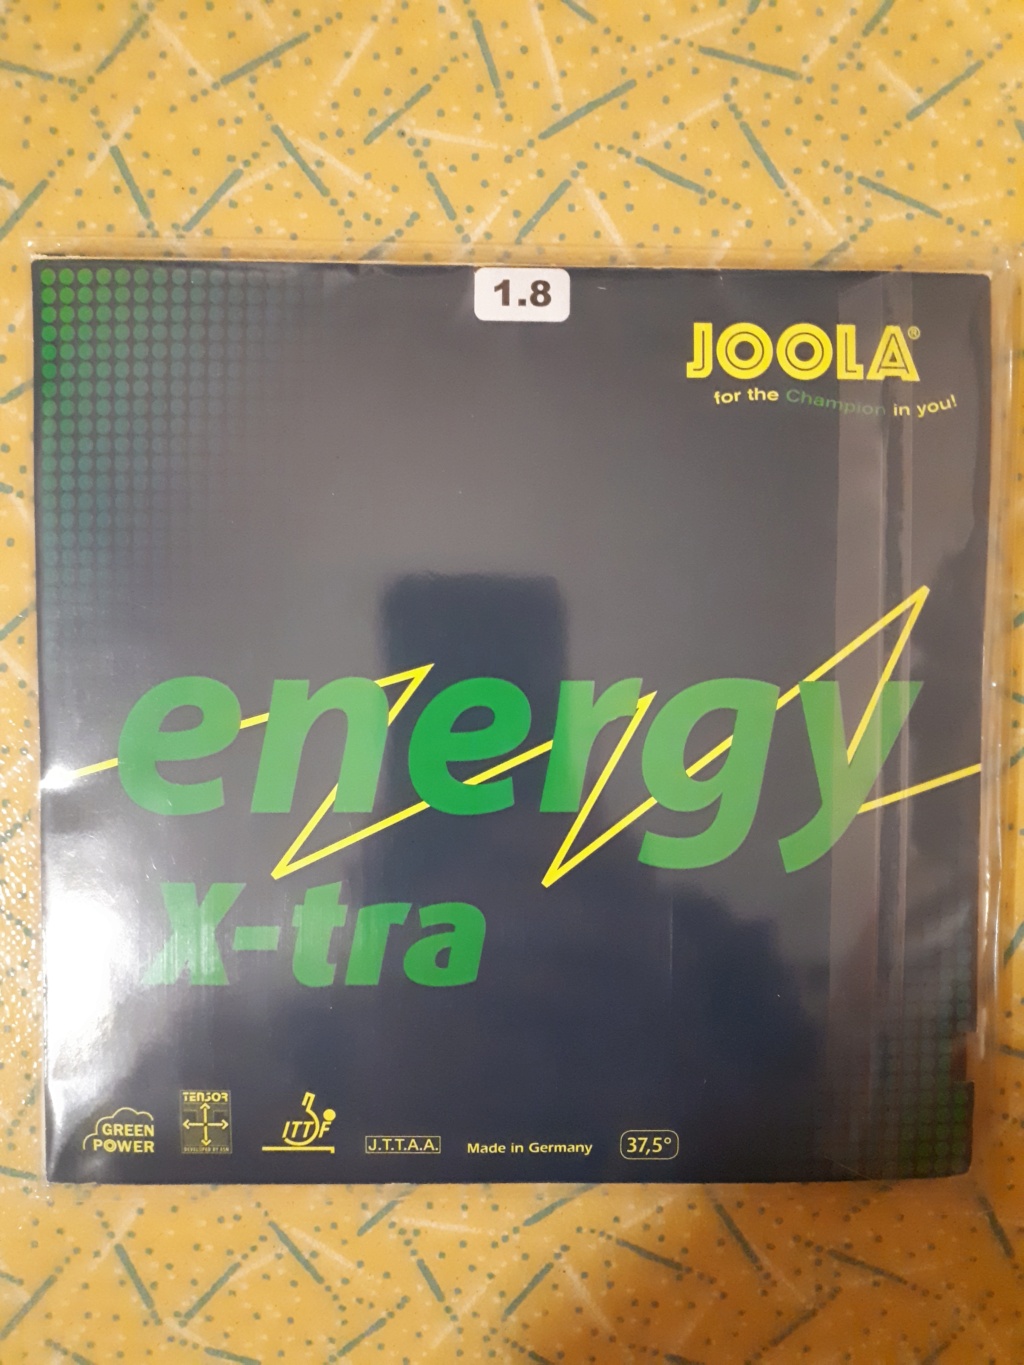 Vds Joola Energy Extra, 1,8mm, noire, sous blister, 25€ fdpi 20220517